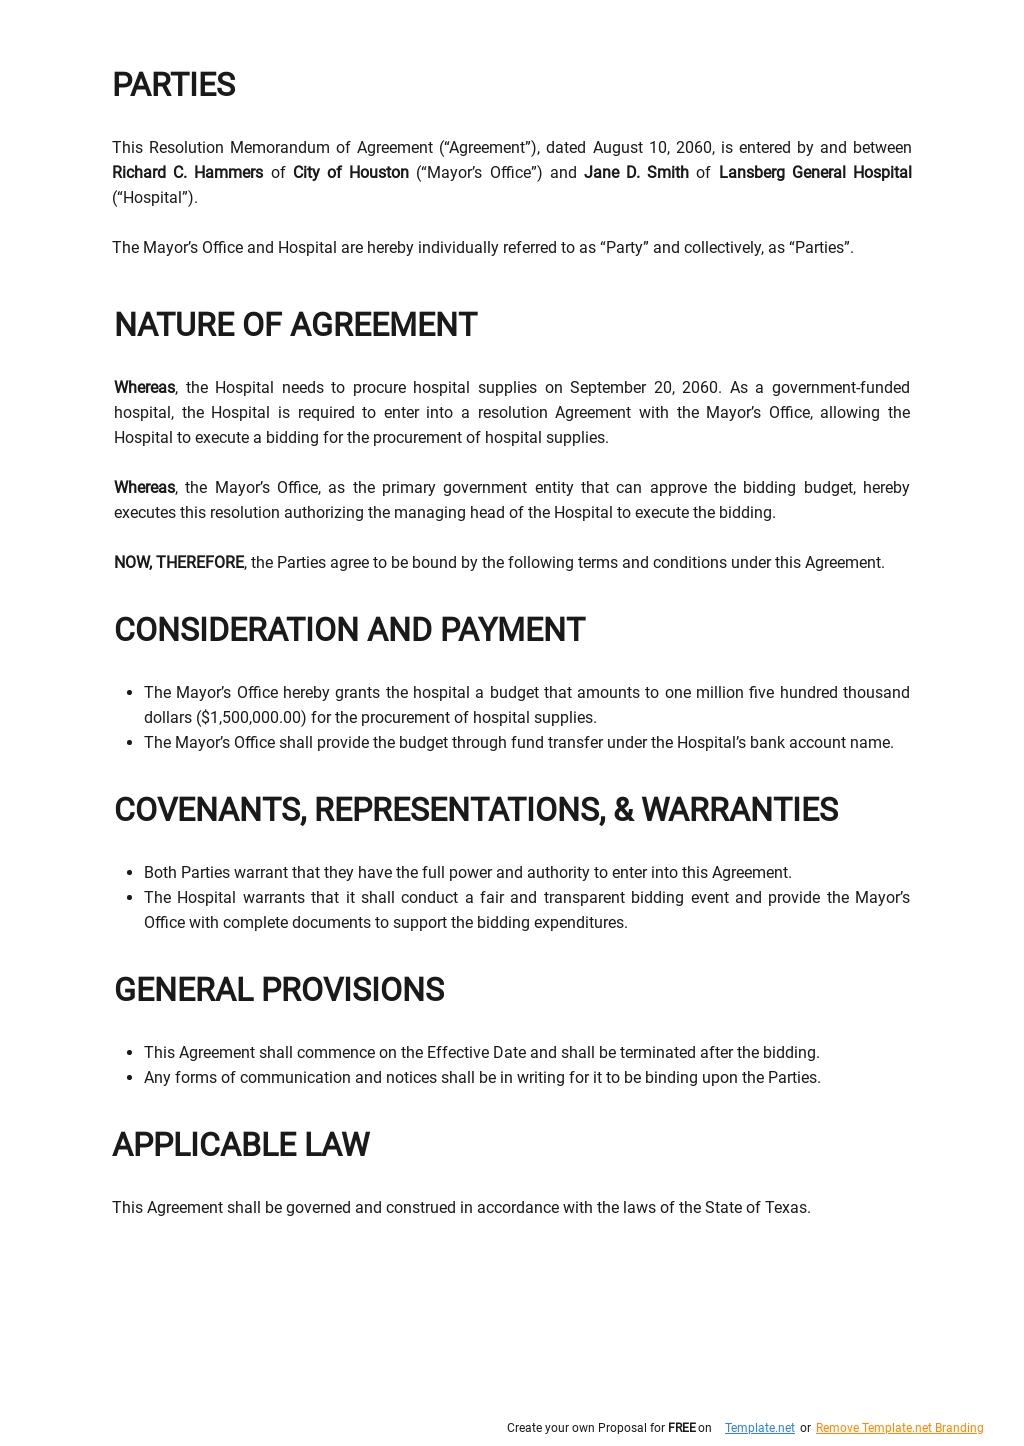 Resolution Memorandum of Agreement Template  1.jpe